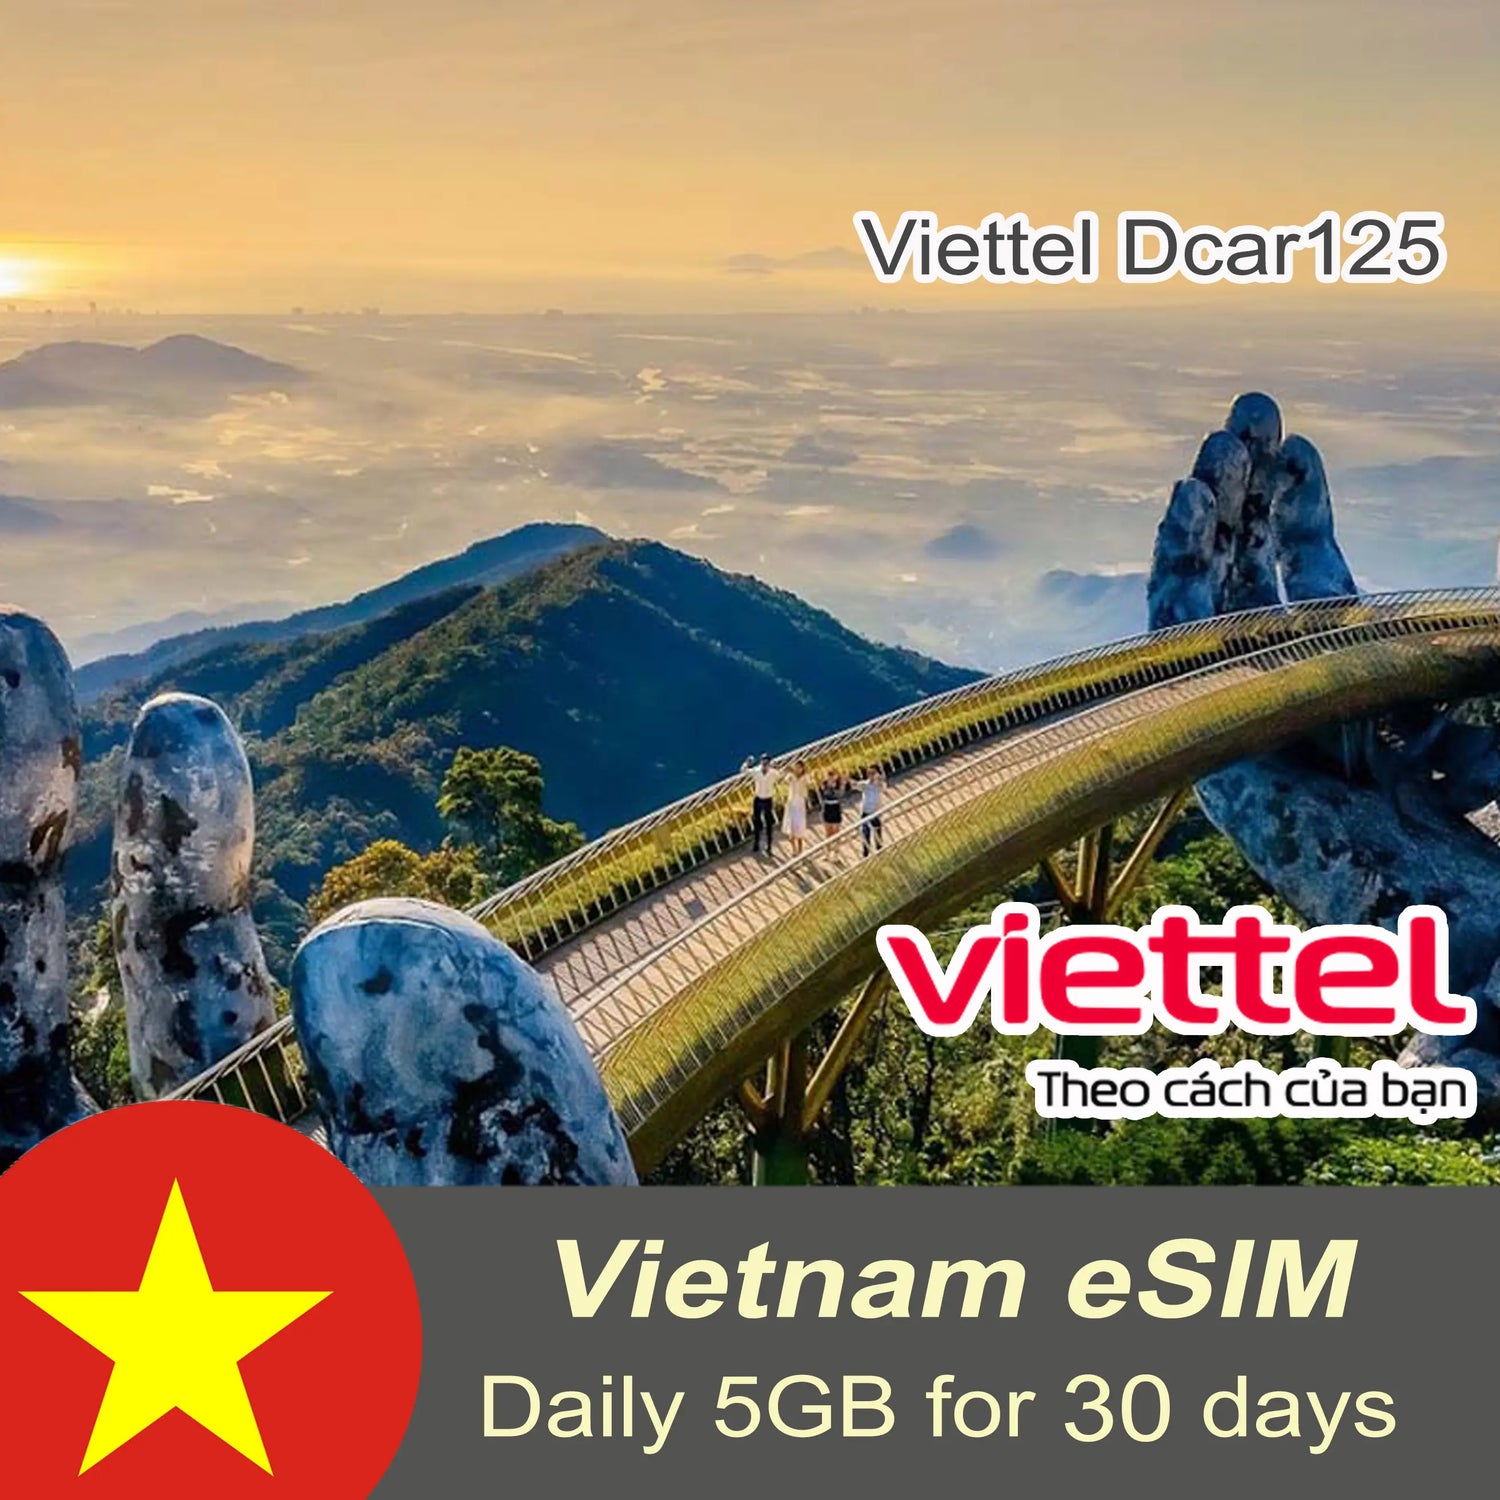 esim viettel daily 5GB for 30 days